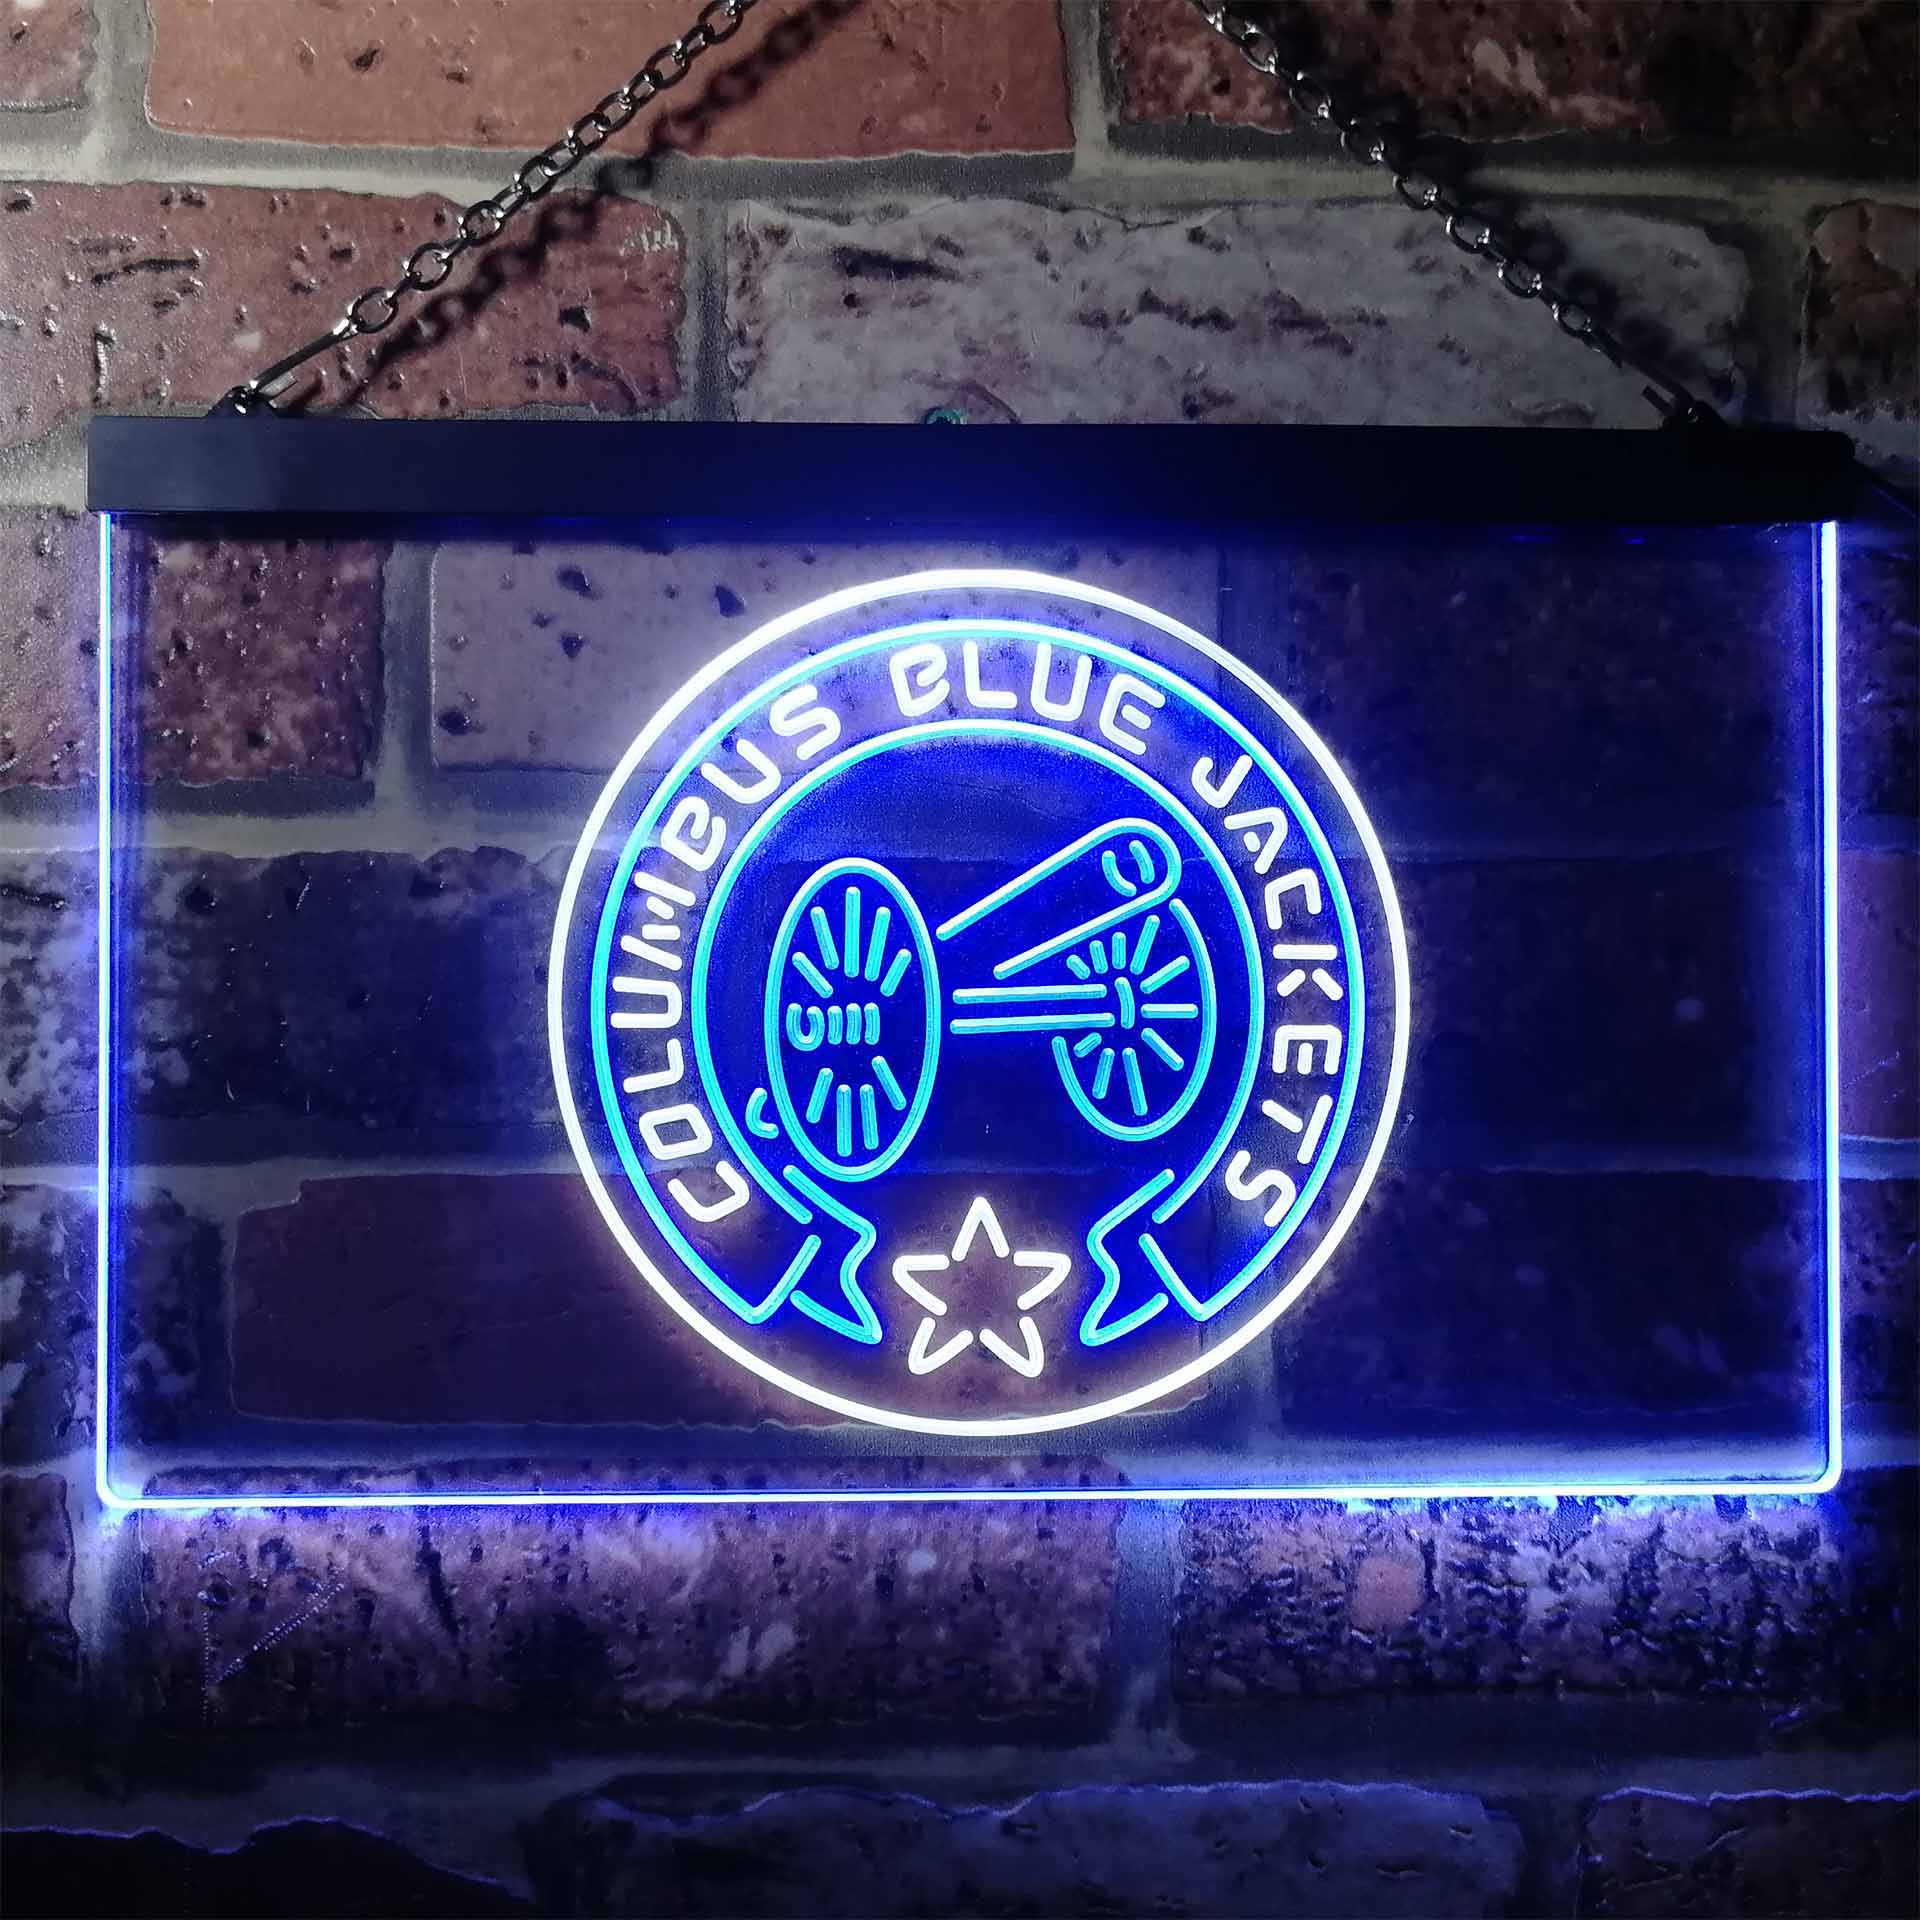 Columbus Sport Team Blue Jackets Neon LED Sign